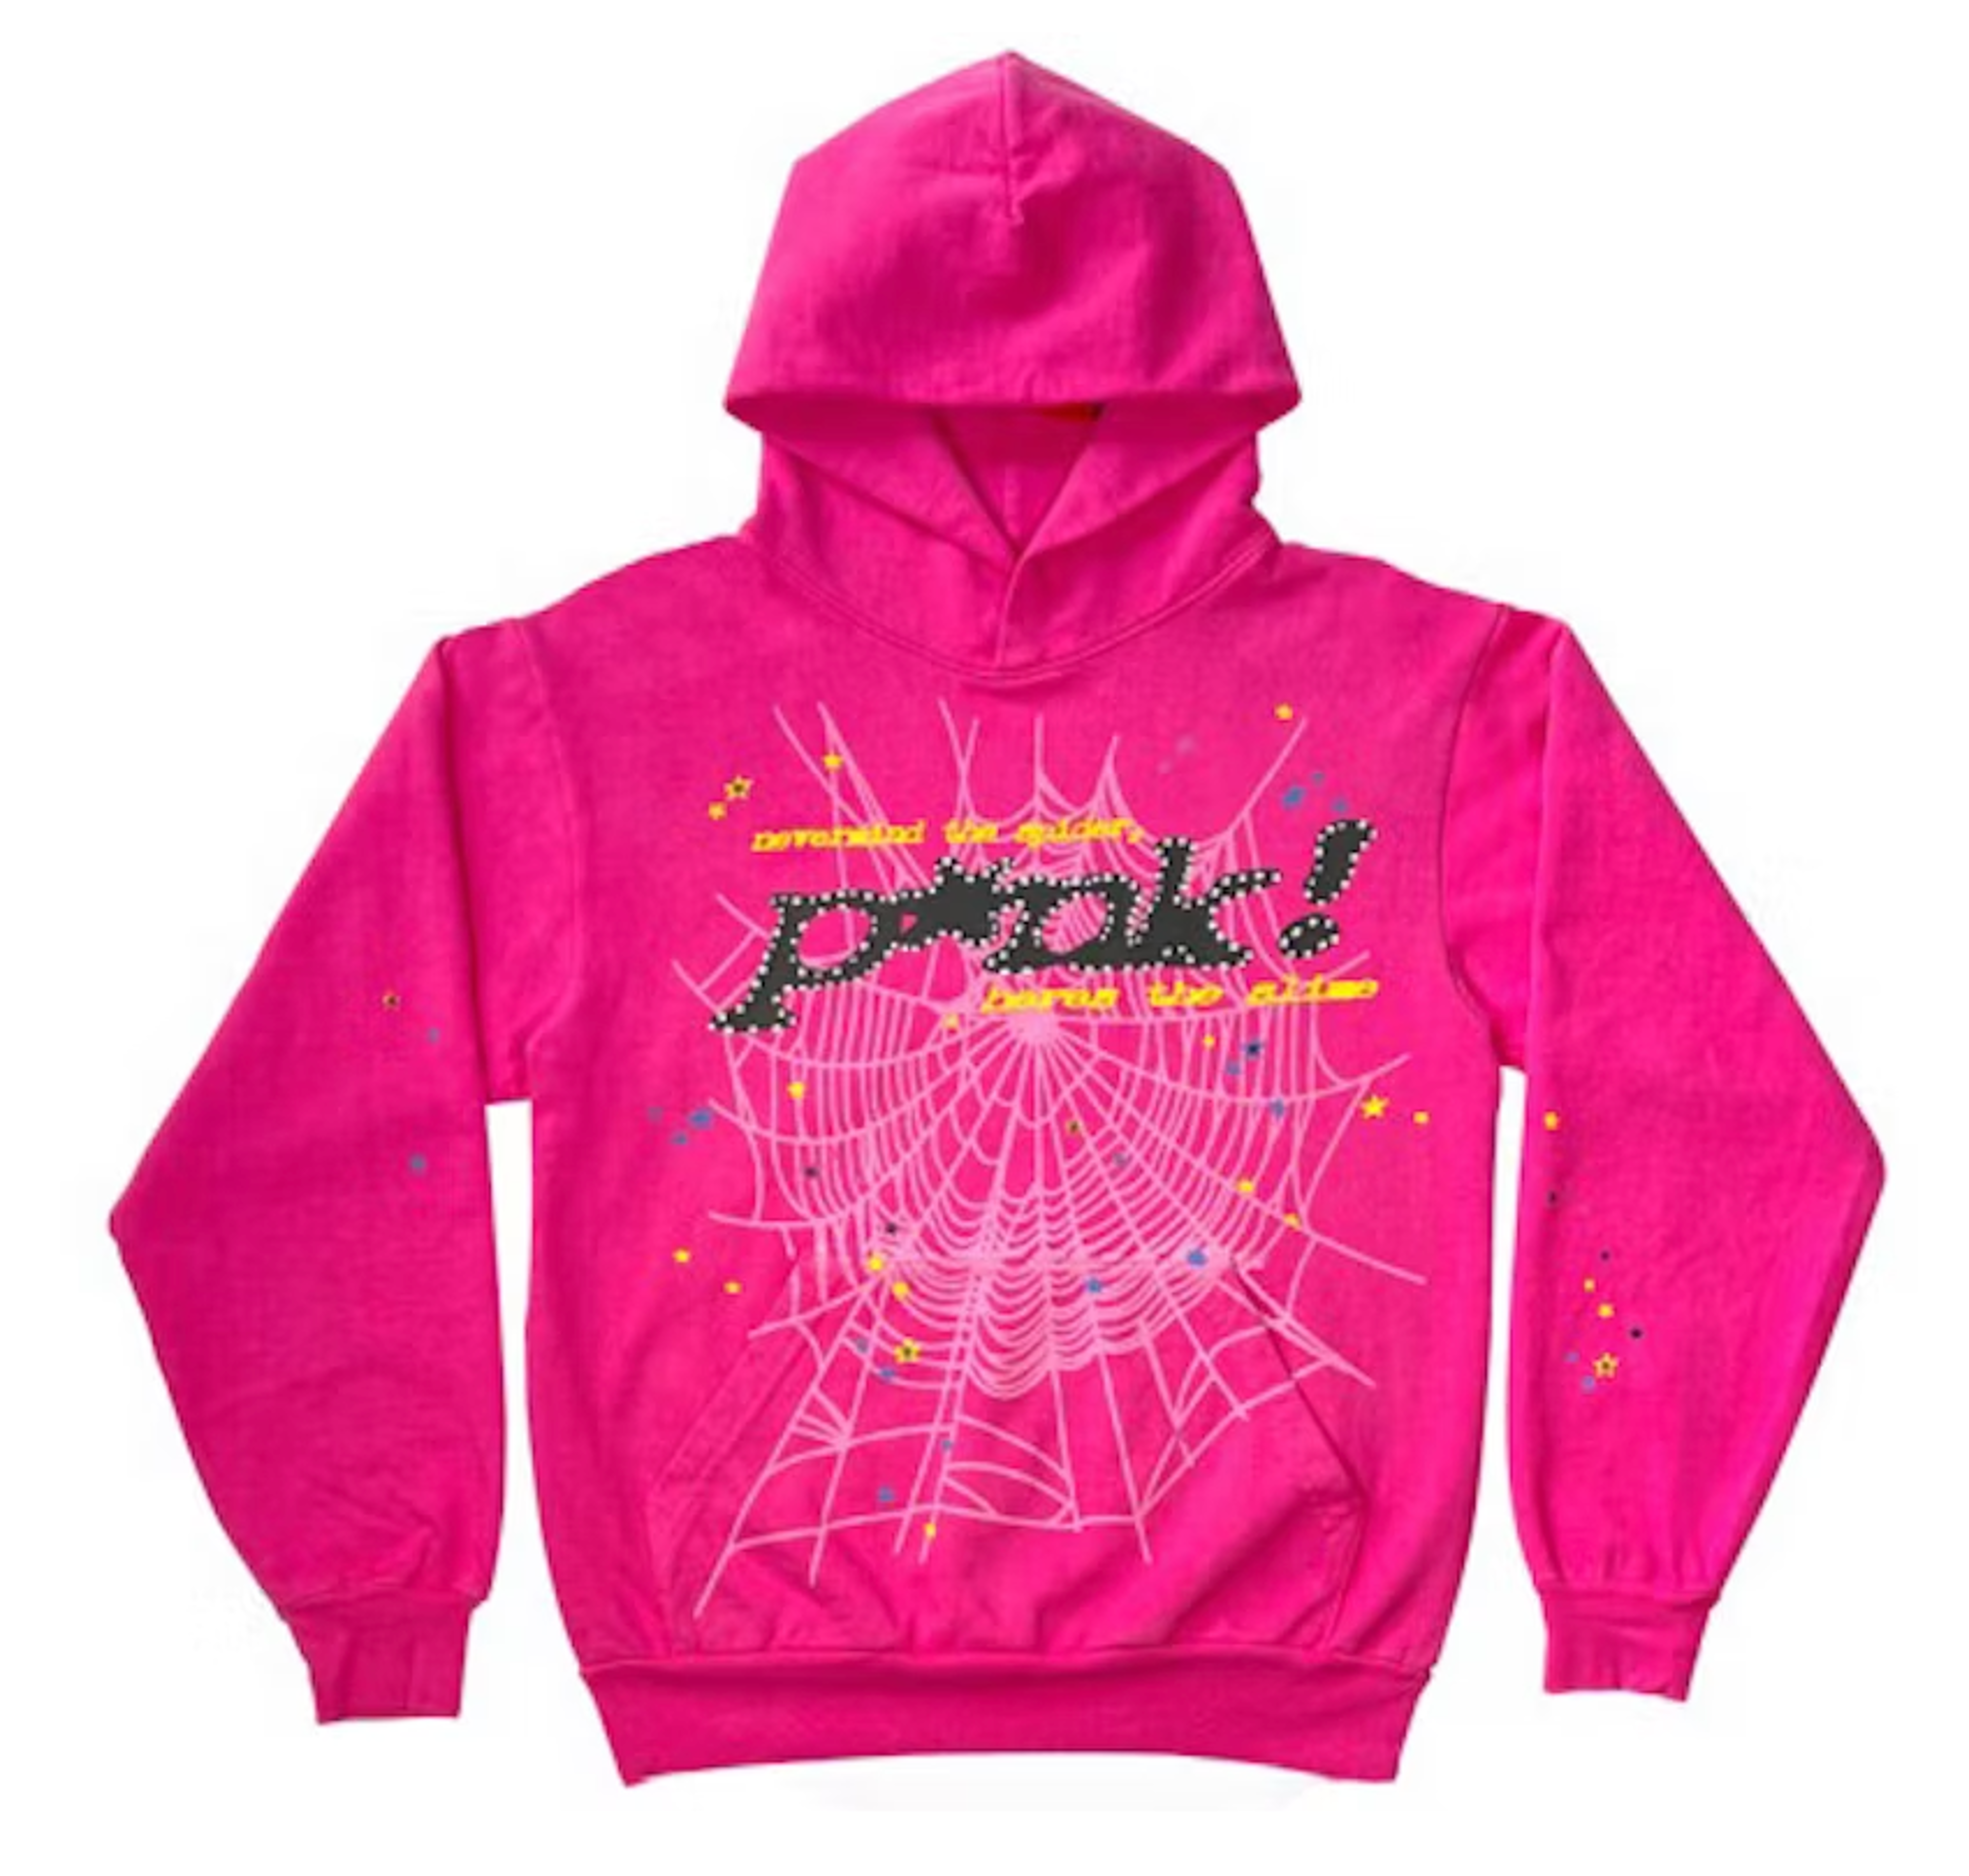 Spider Worldwide P*NK Hooded Sweatshirt Pink